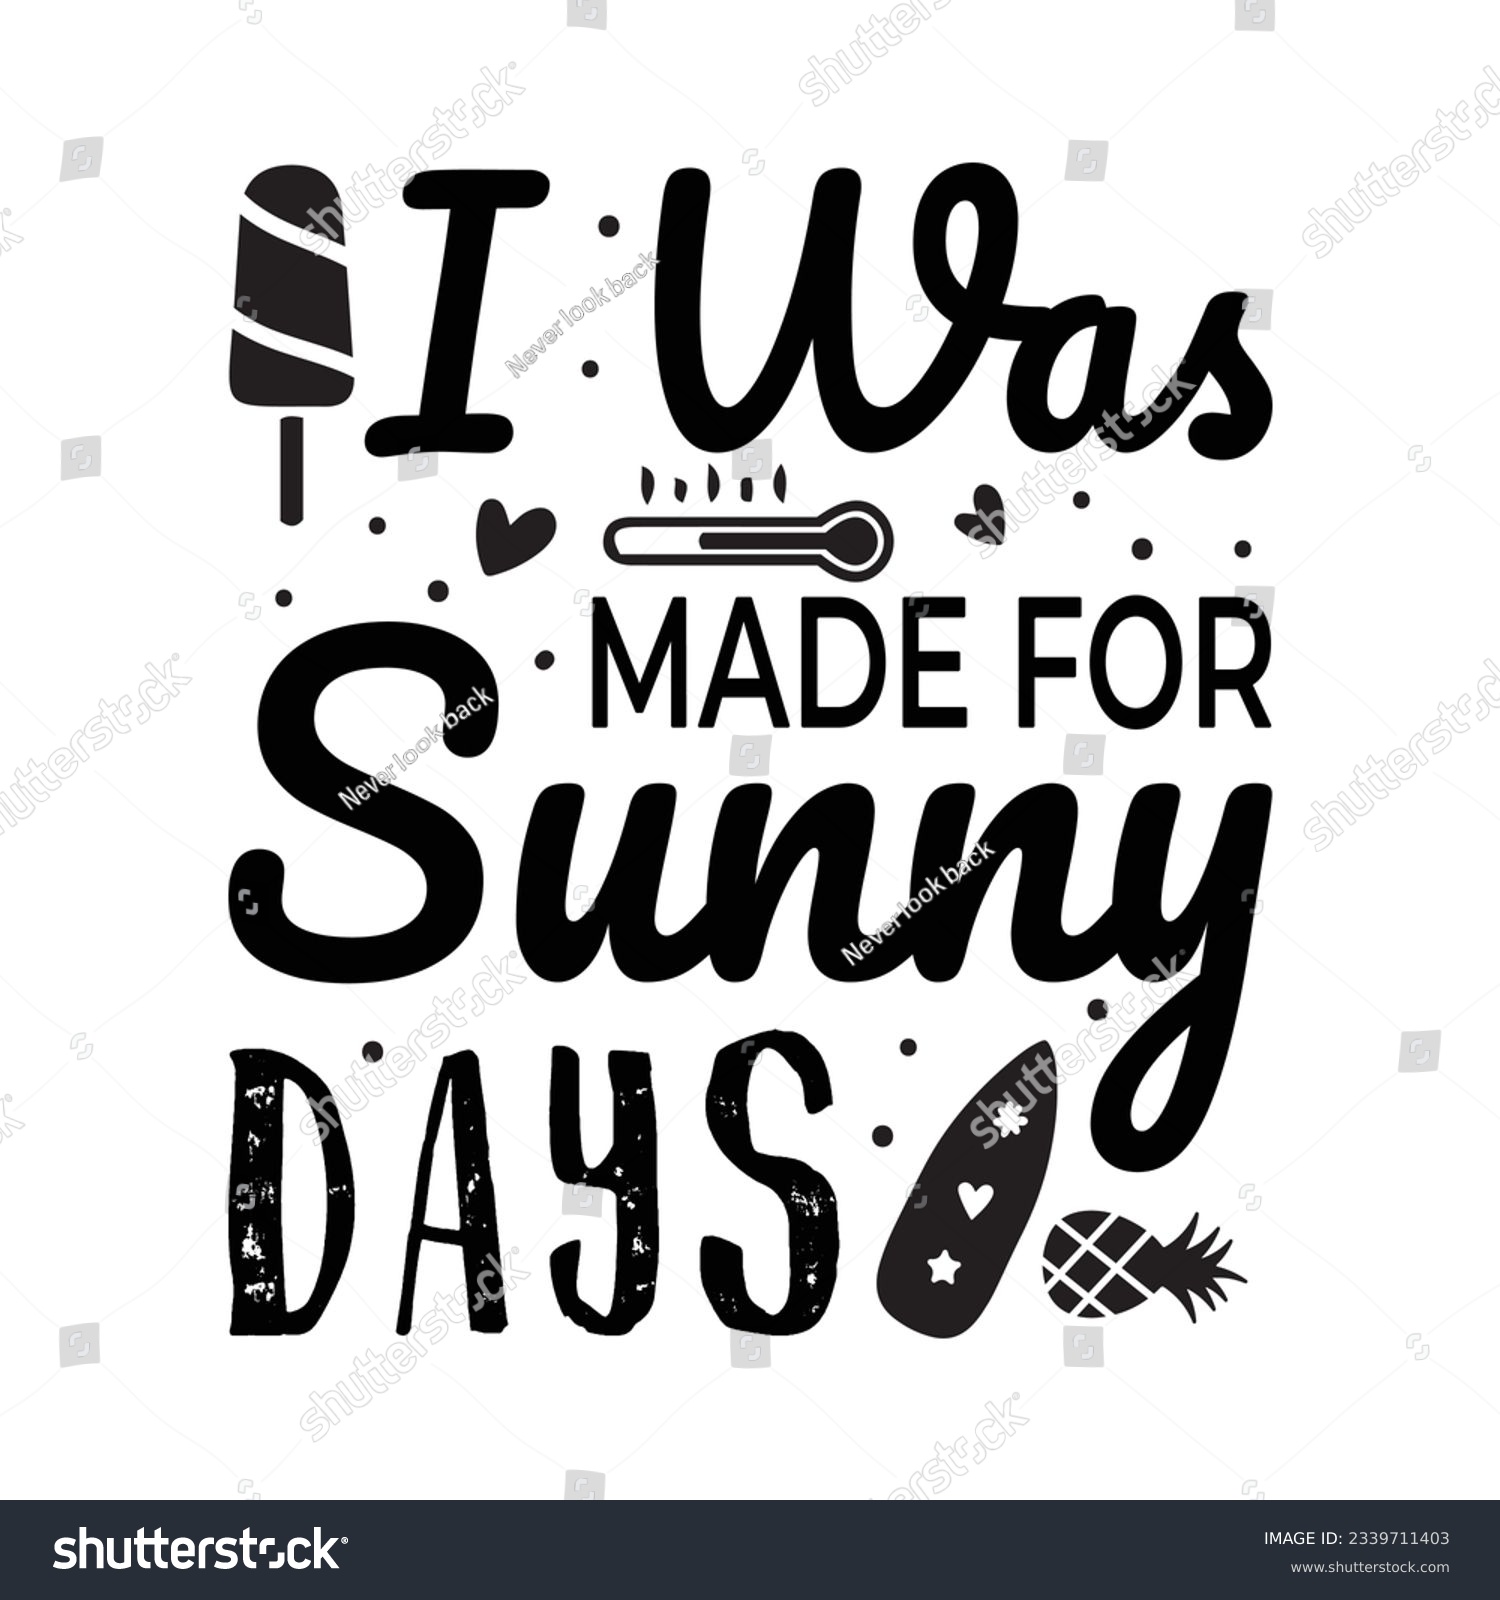 SVG of  I was made for sunny days SVG t-shirt design, summer SVG, summer quotes , waves SVG, beach, summer time  SVG, Hand drawn vintage illustration with lettering and decoration elements
 svg